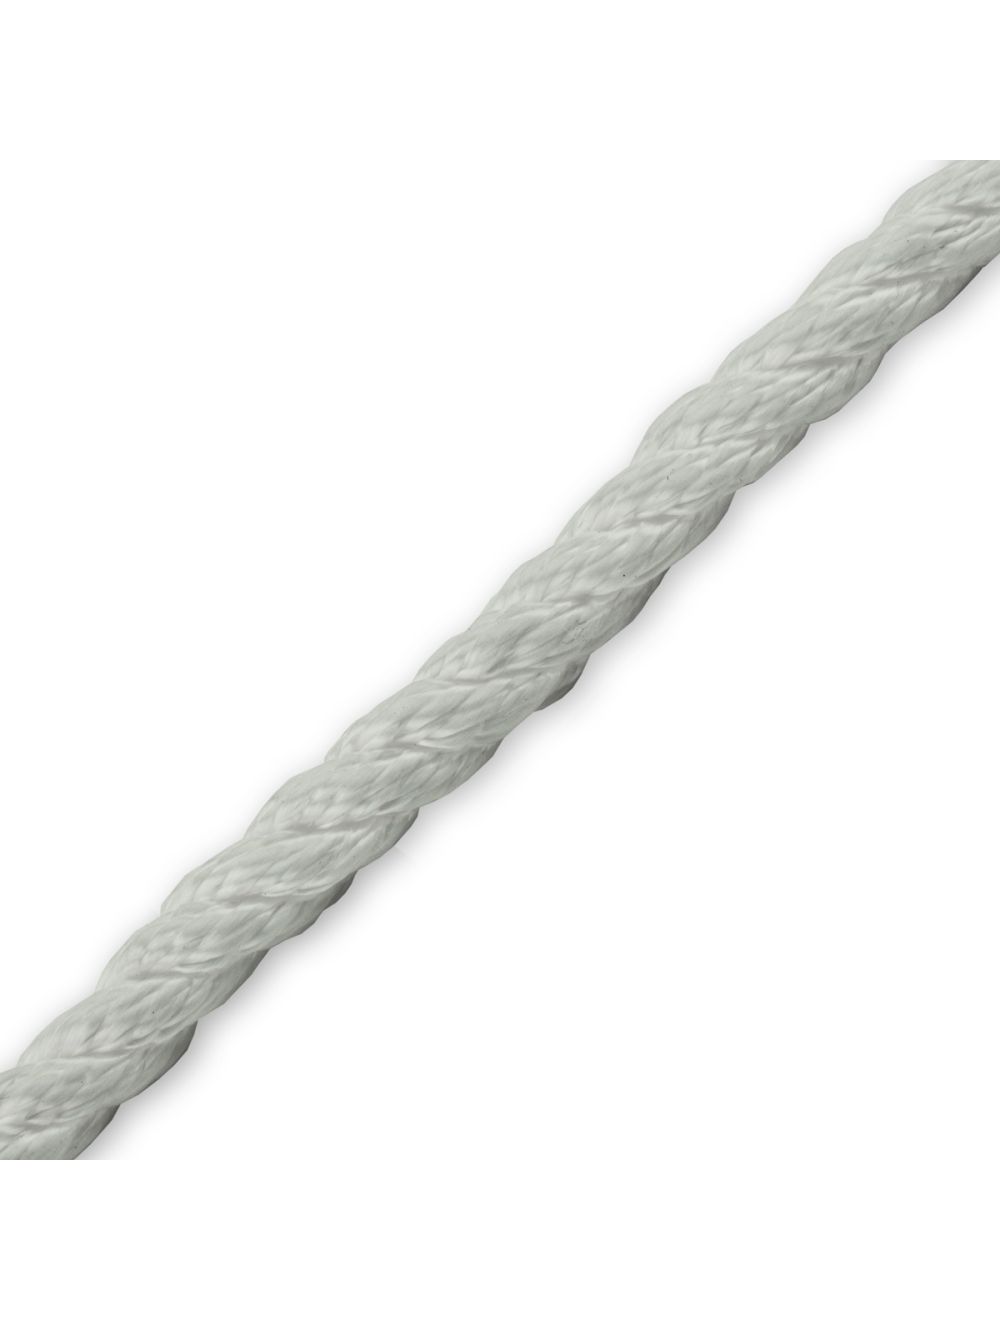 3/8 x 600' 3-Strand Twisted White Nylon Rope